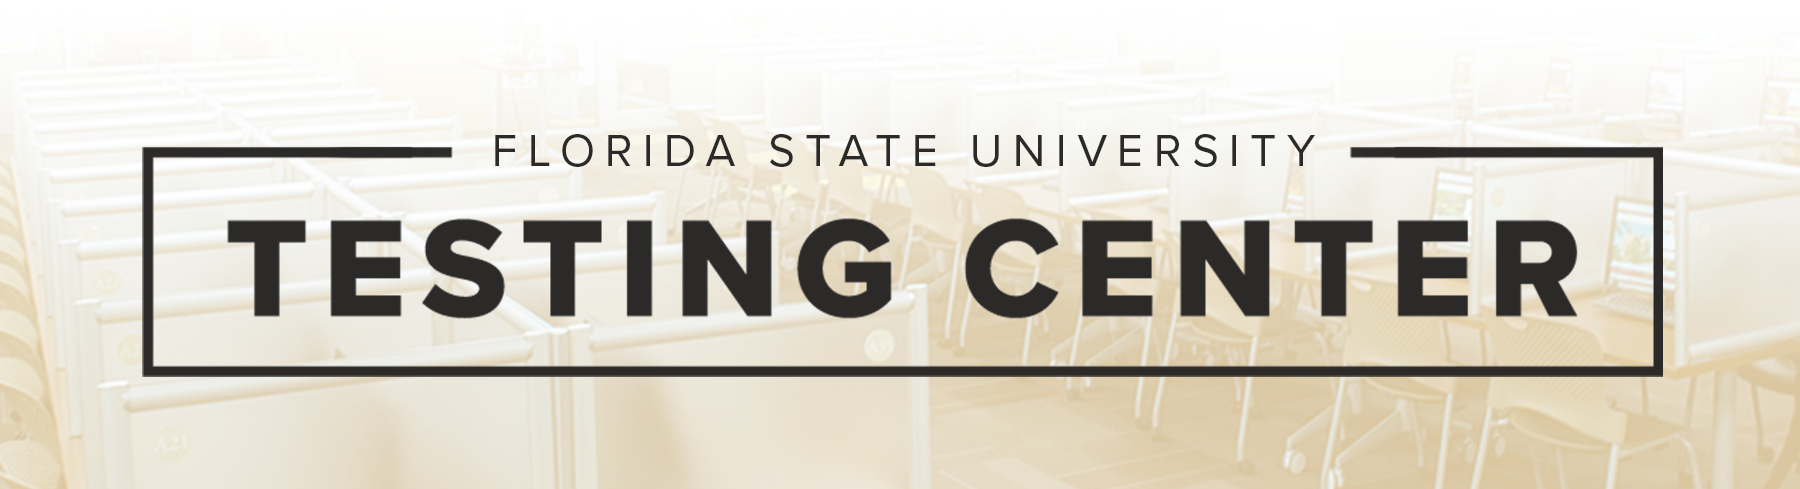 Florida State University Testing Center